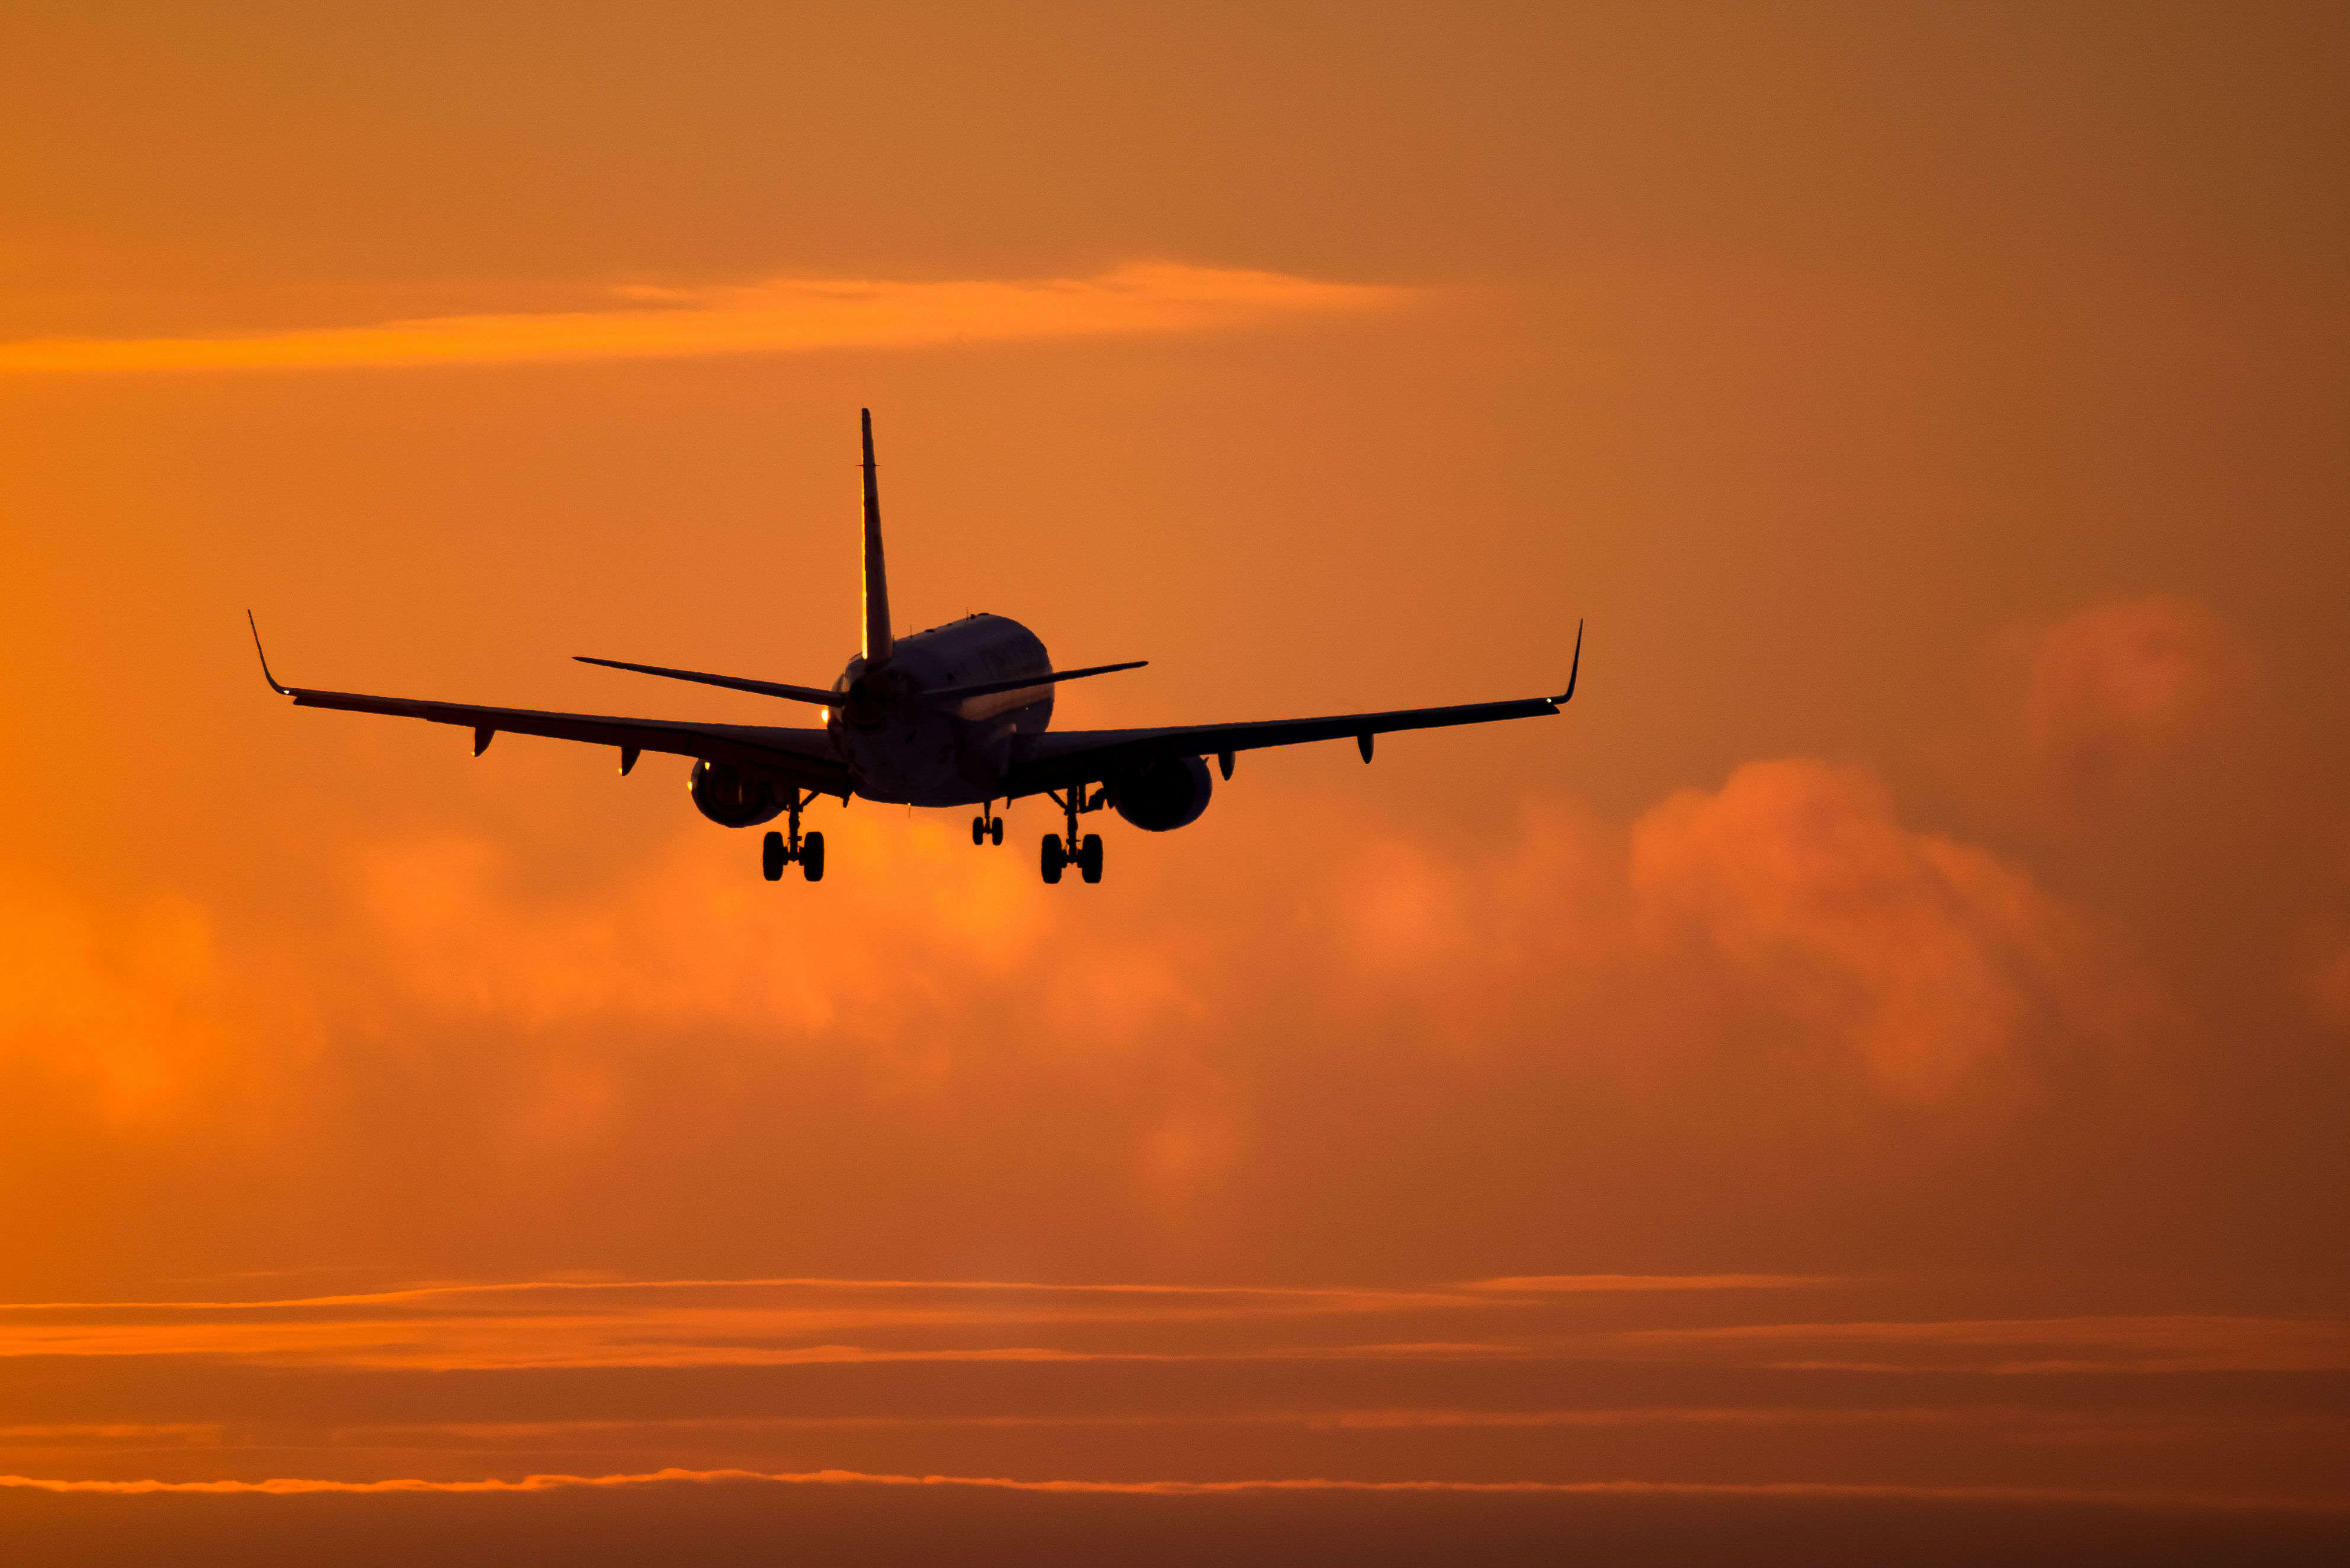 Travel update - international airfares soar & summer vacations dampen